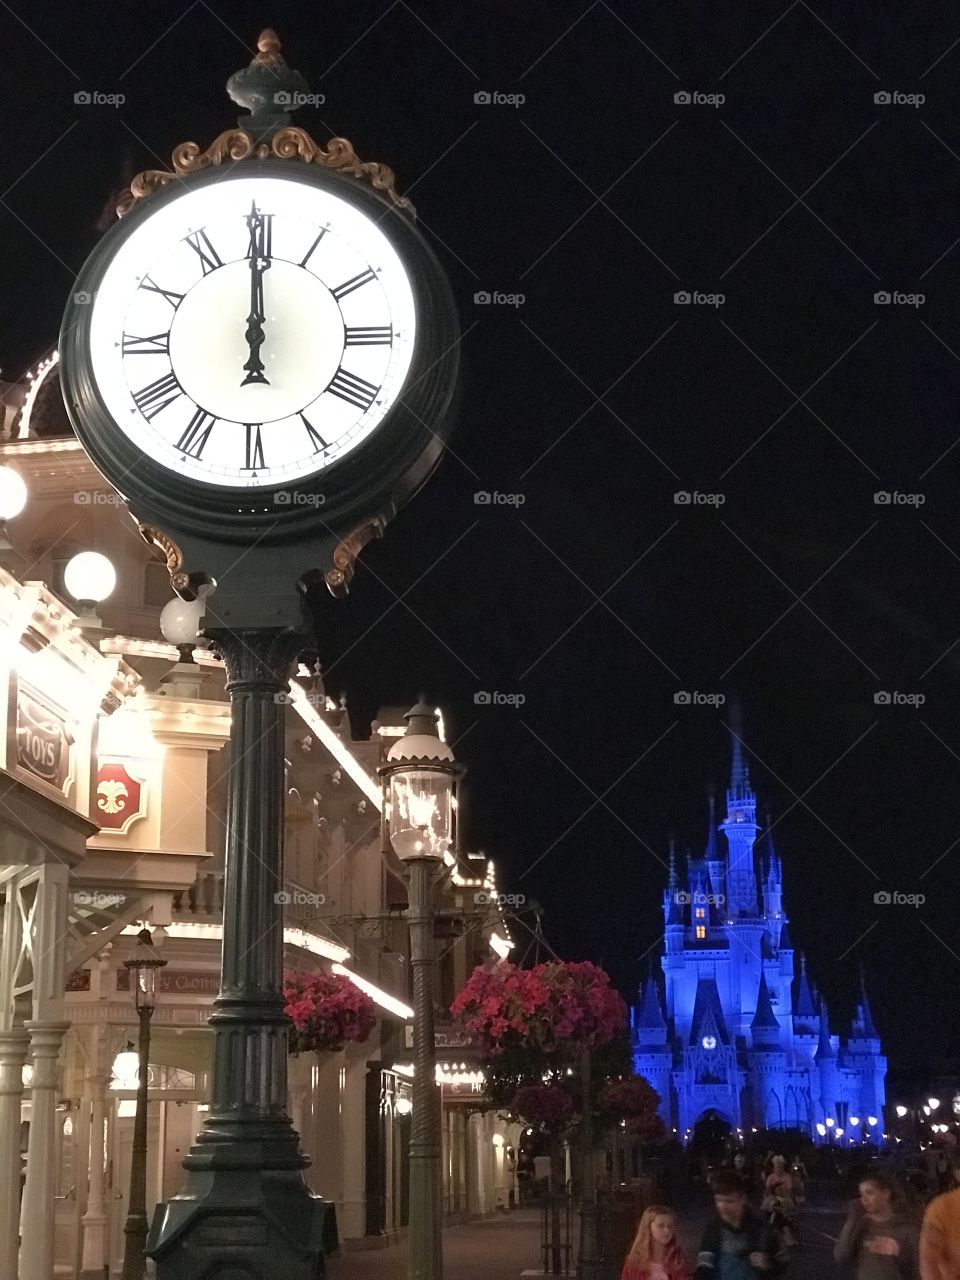 Clock strikes midnight in the Magic Kingdom